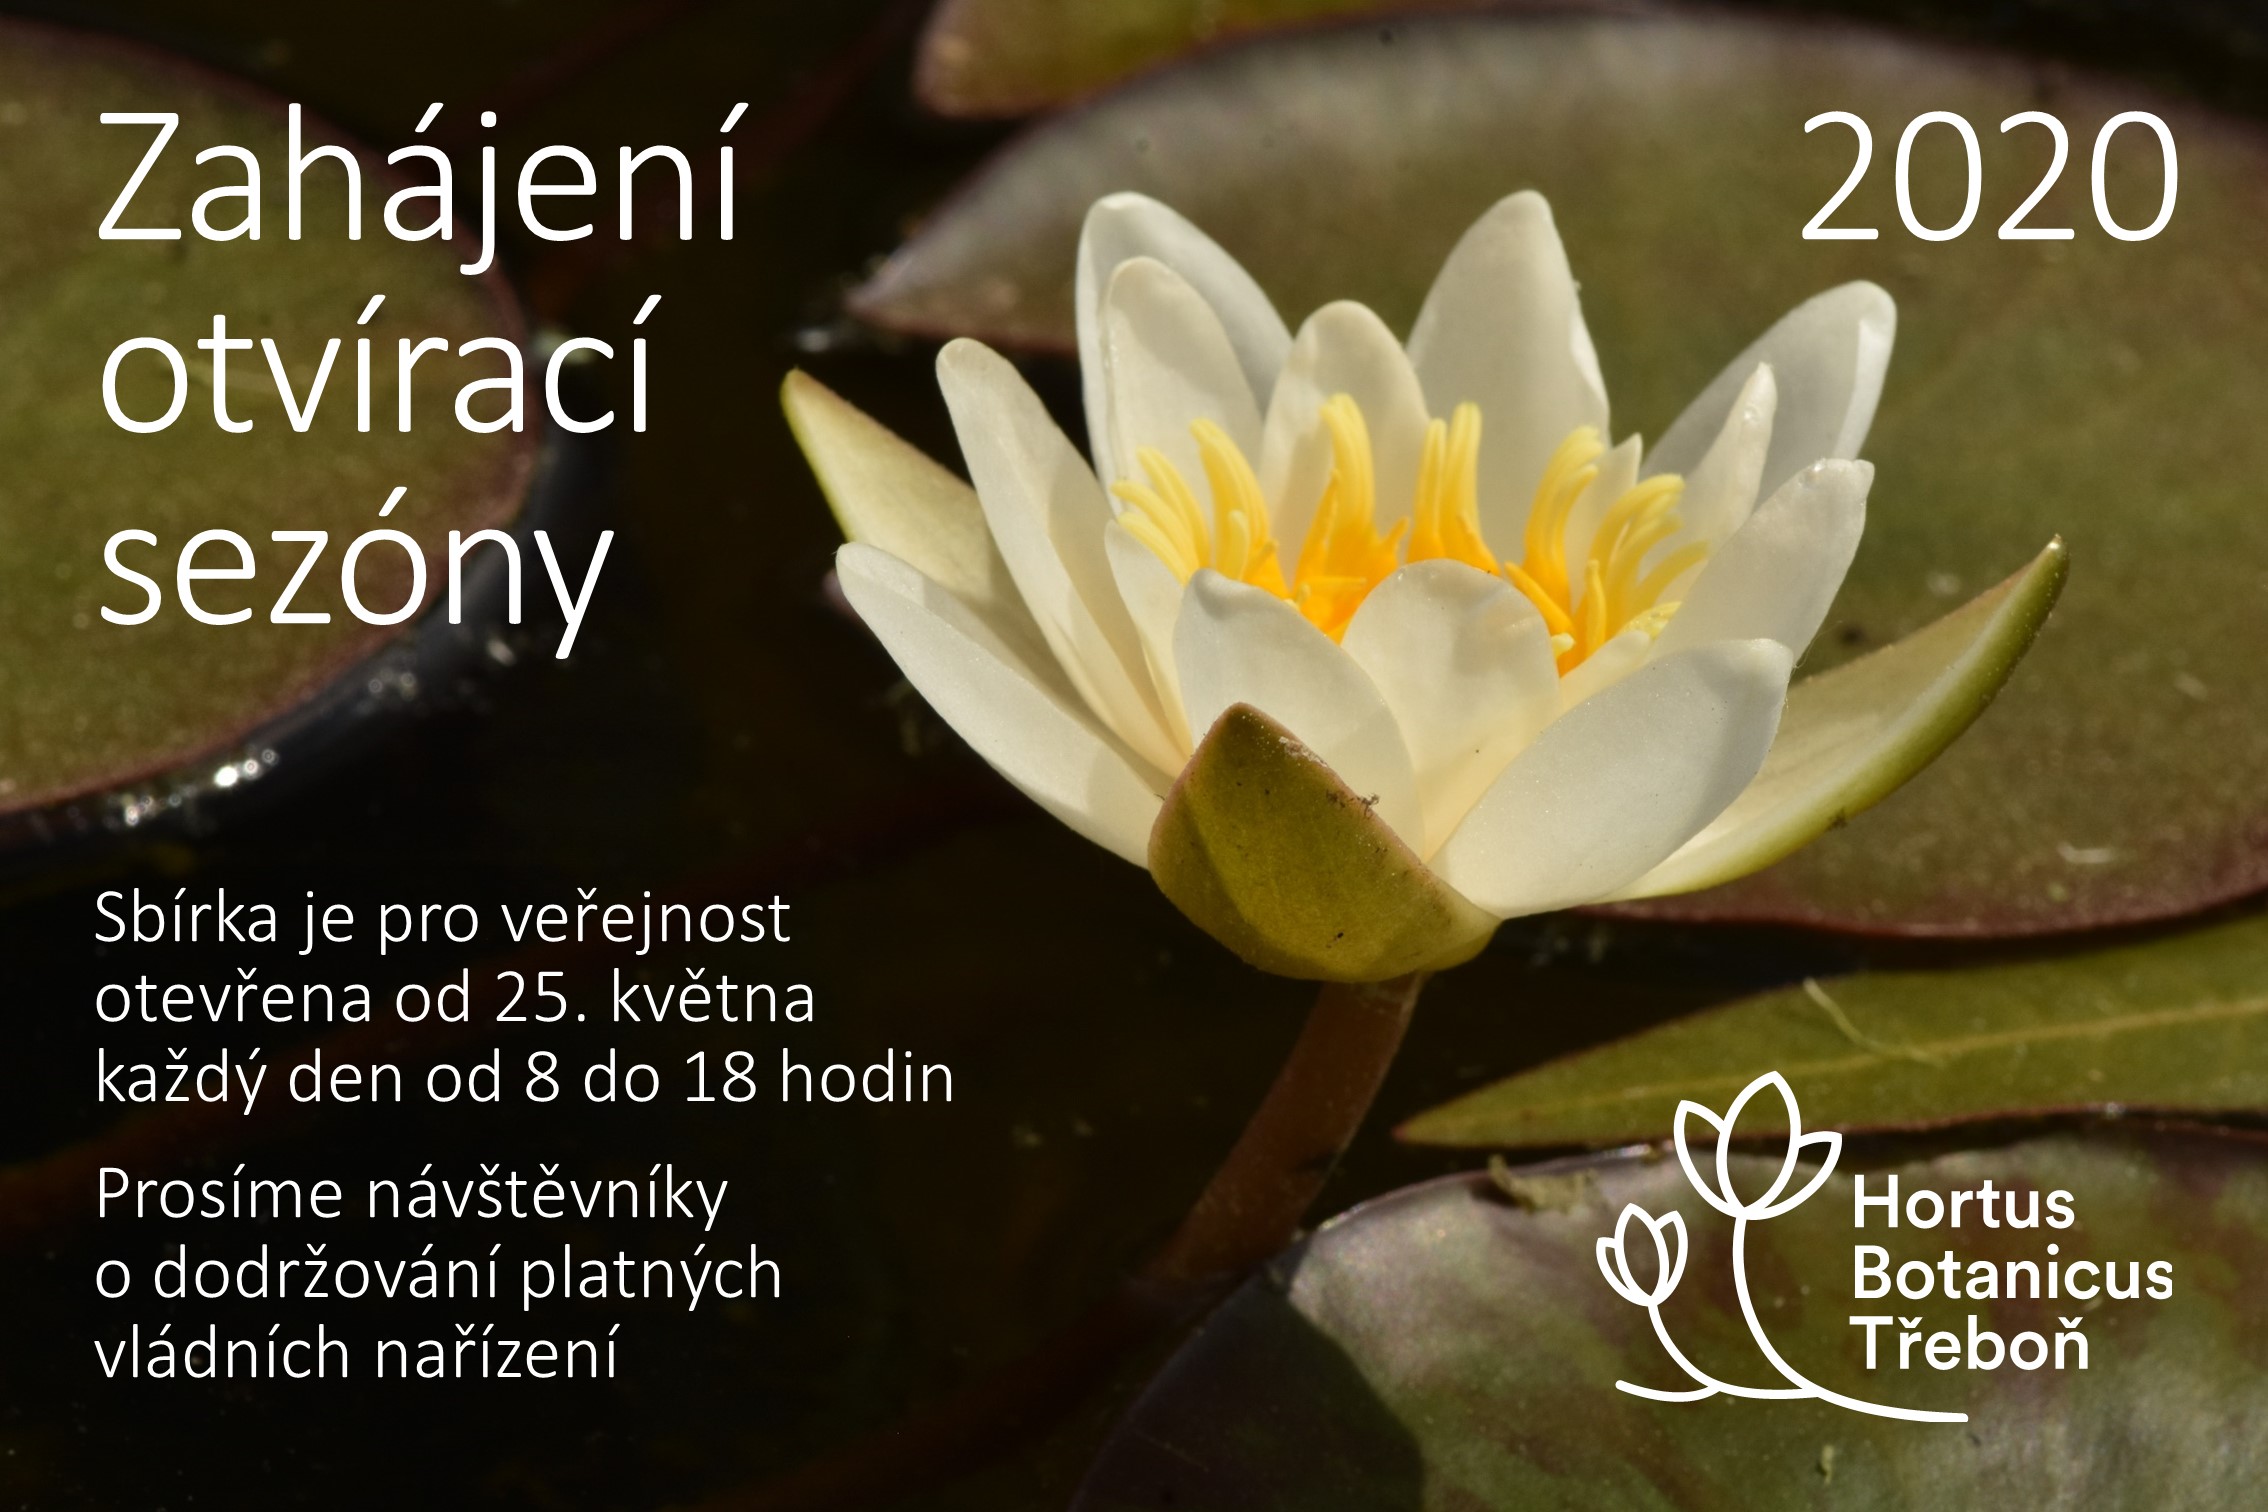 Hortus Botanicus Třeboň is open for season 2020